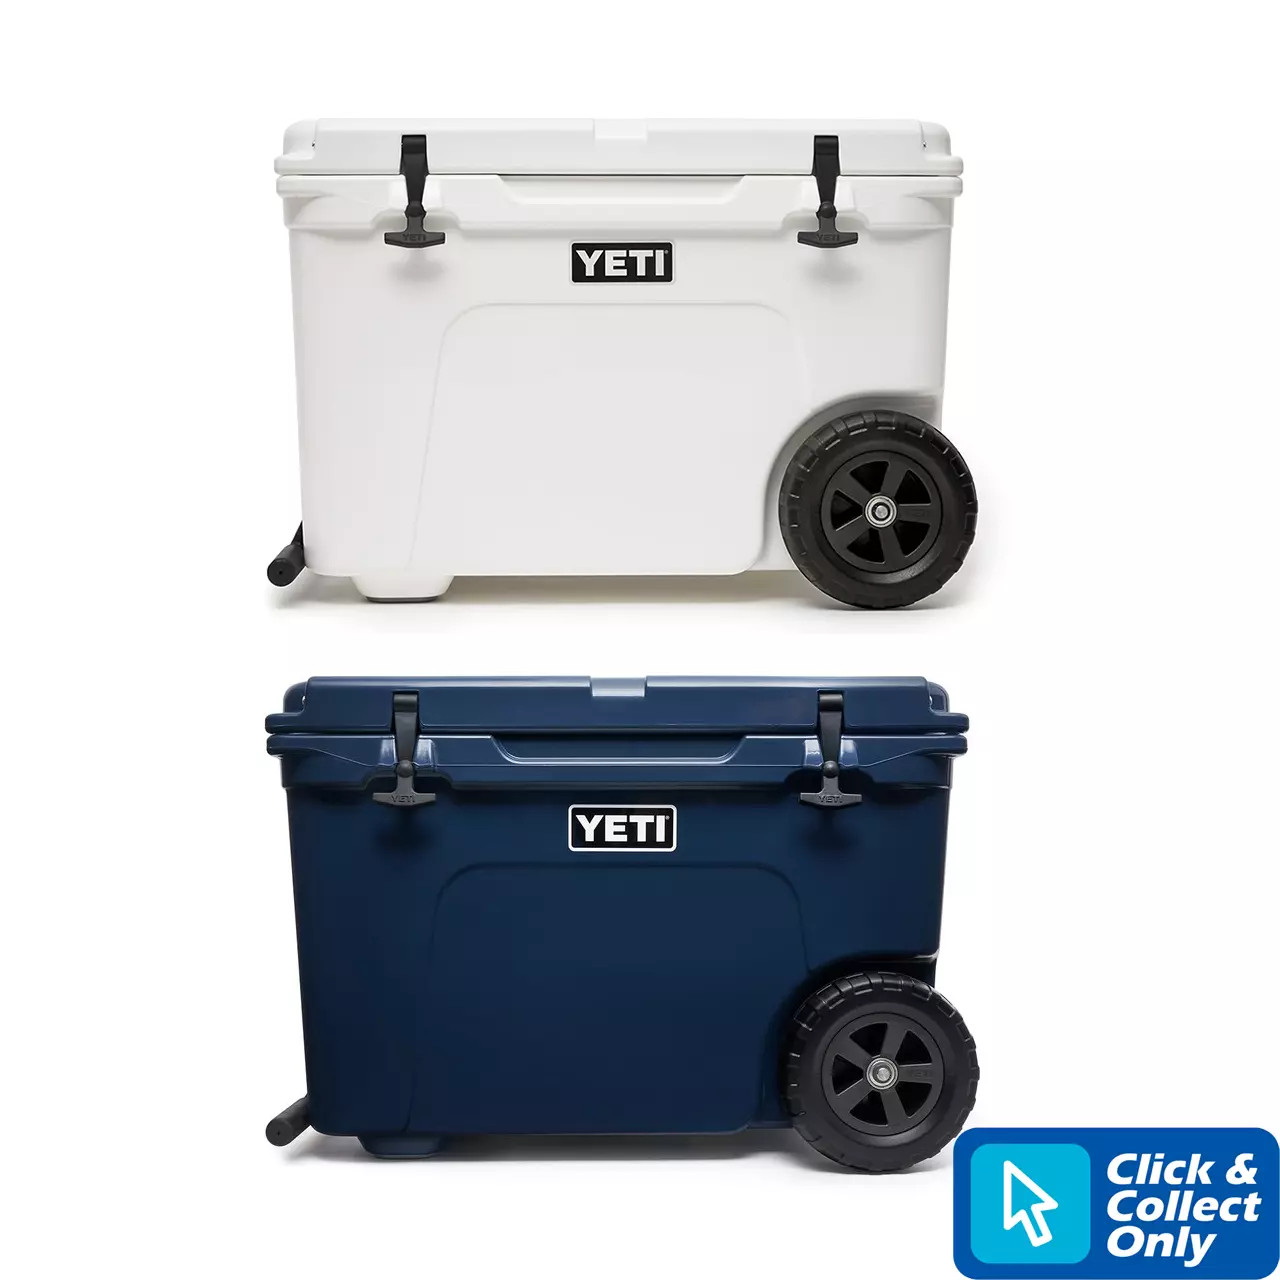 Yeti Tundra 65 Hard Cooler from Yeti - CHAOS Fishing